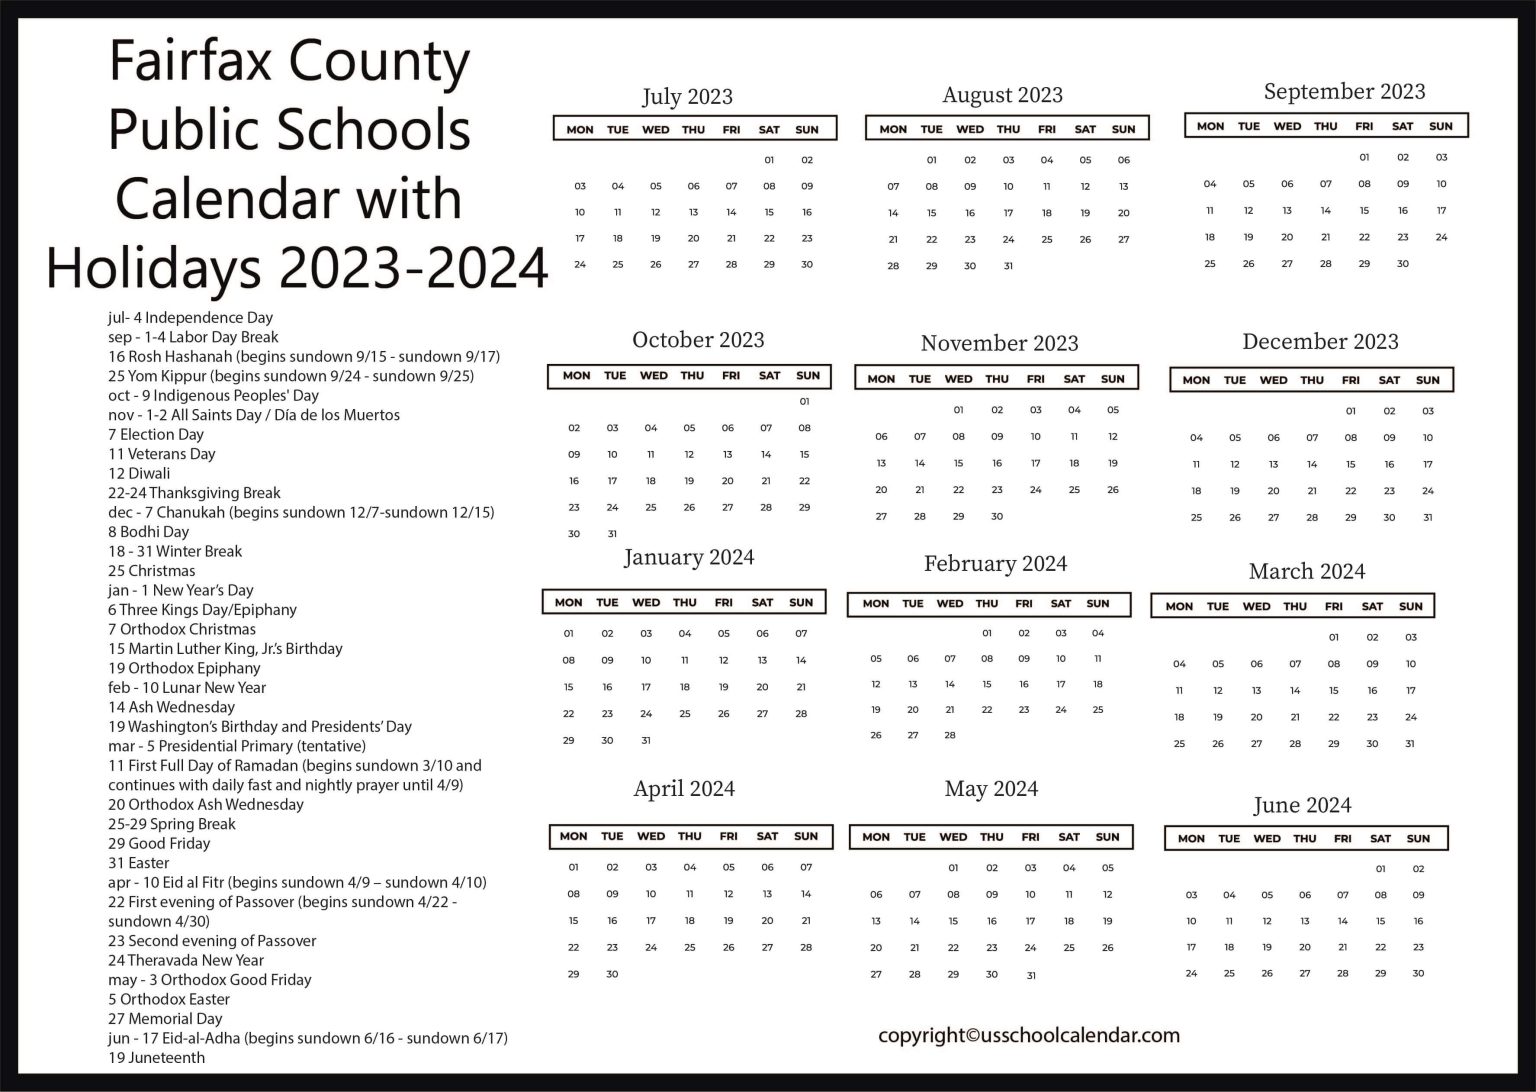 fairfax-county-public-schools-calendar-with-holidays-2023-2024